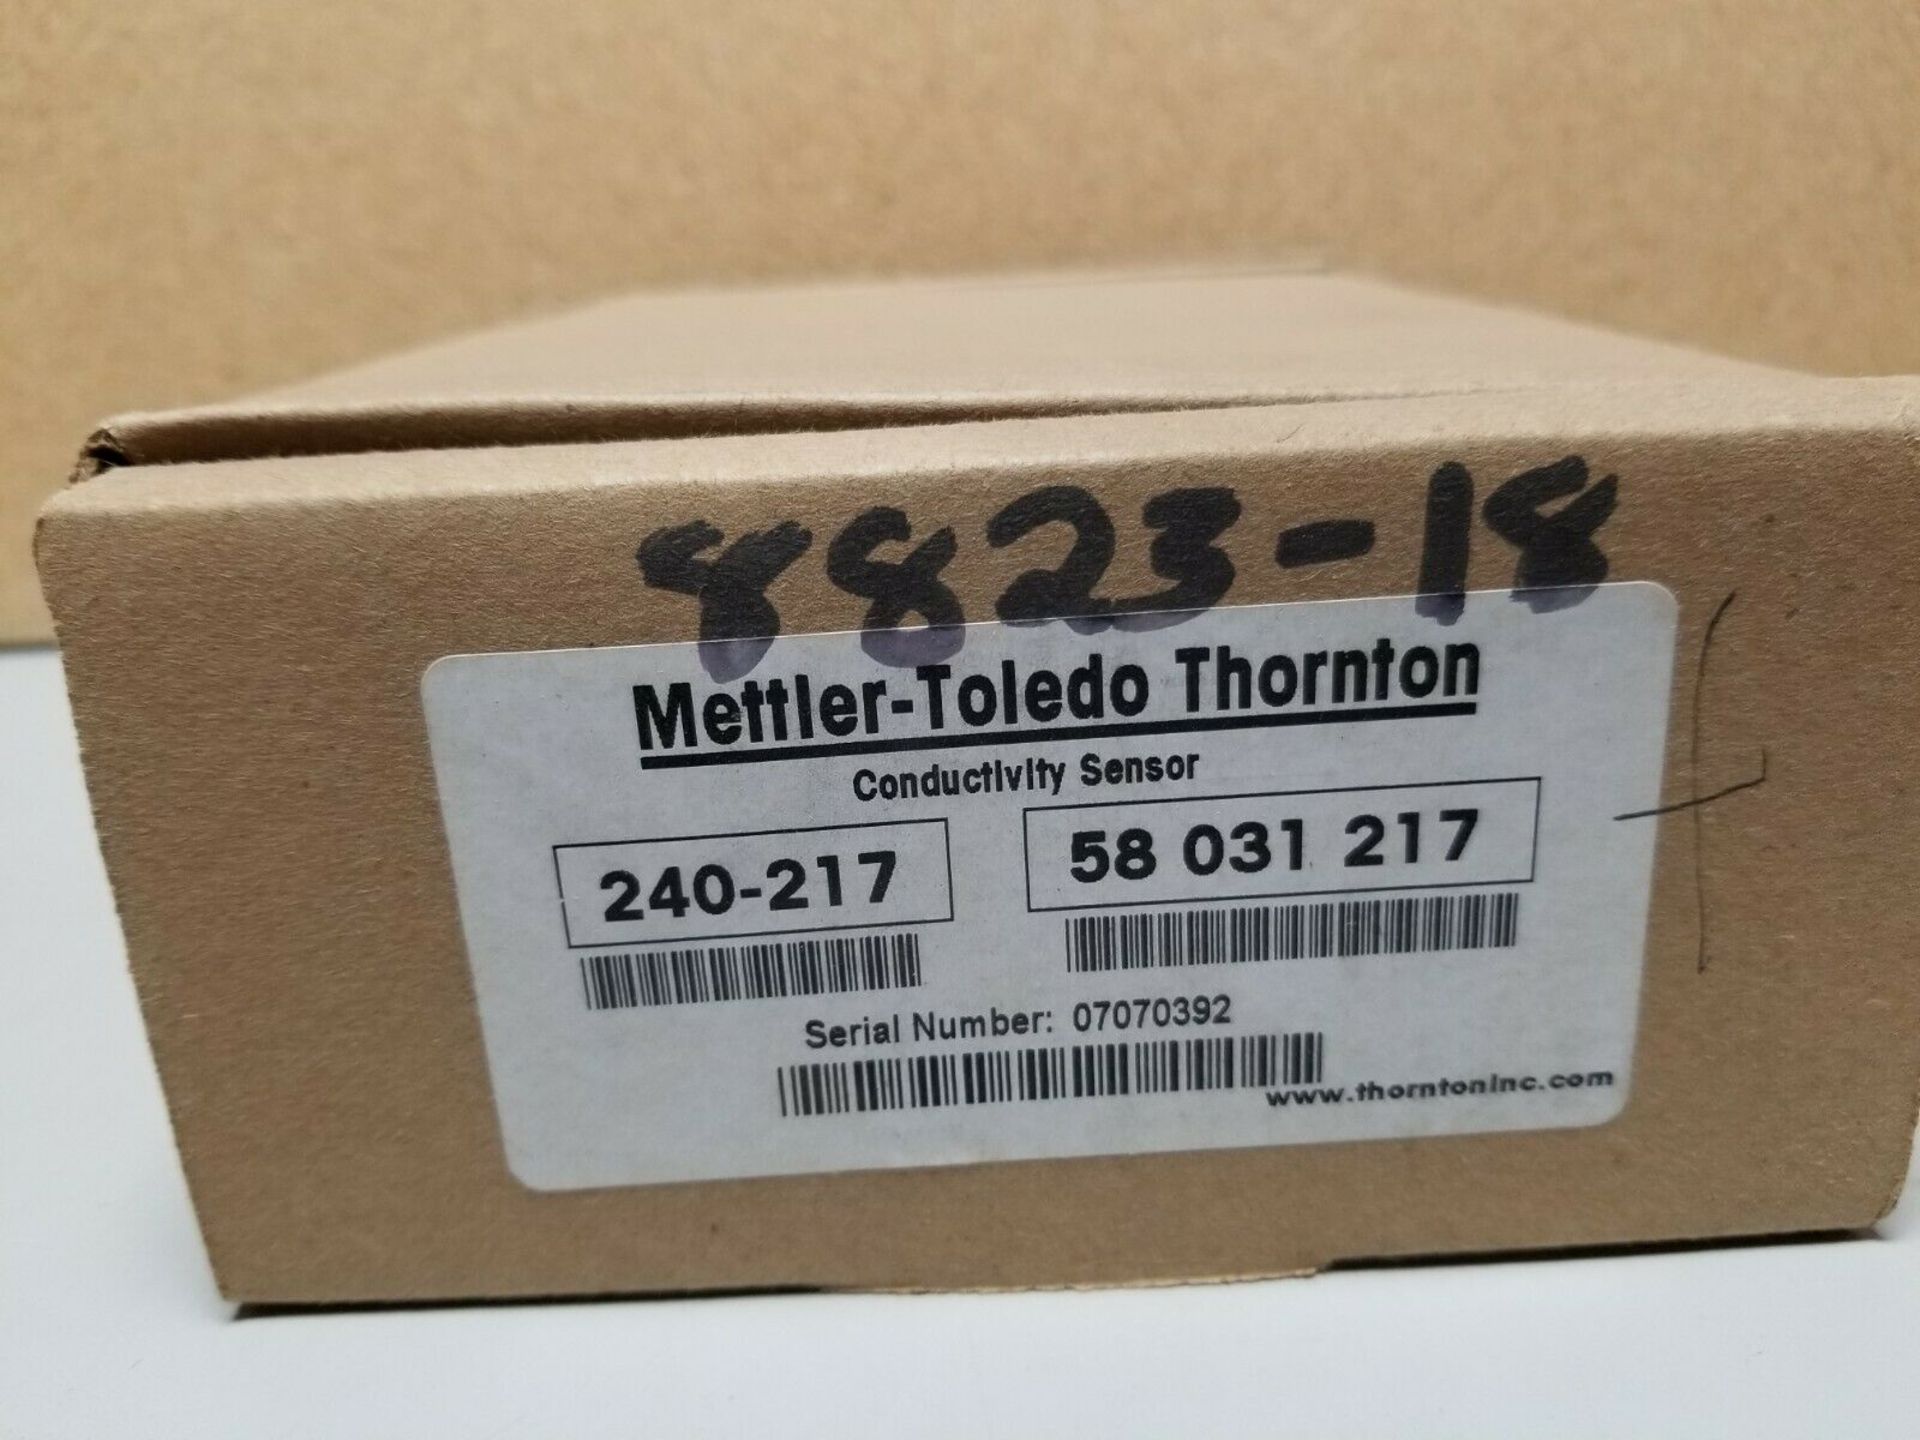 NEW METTLER TOLEDO THORNTON CONDUCTIVITY SENSOR - Image 2 of 6